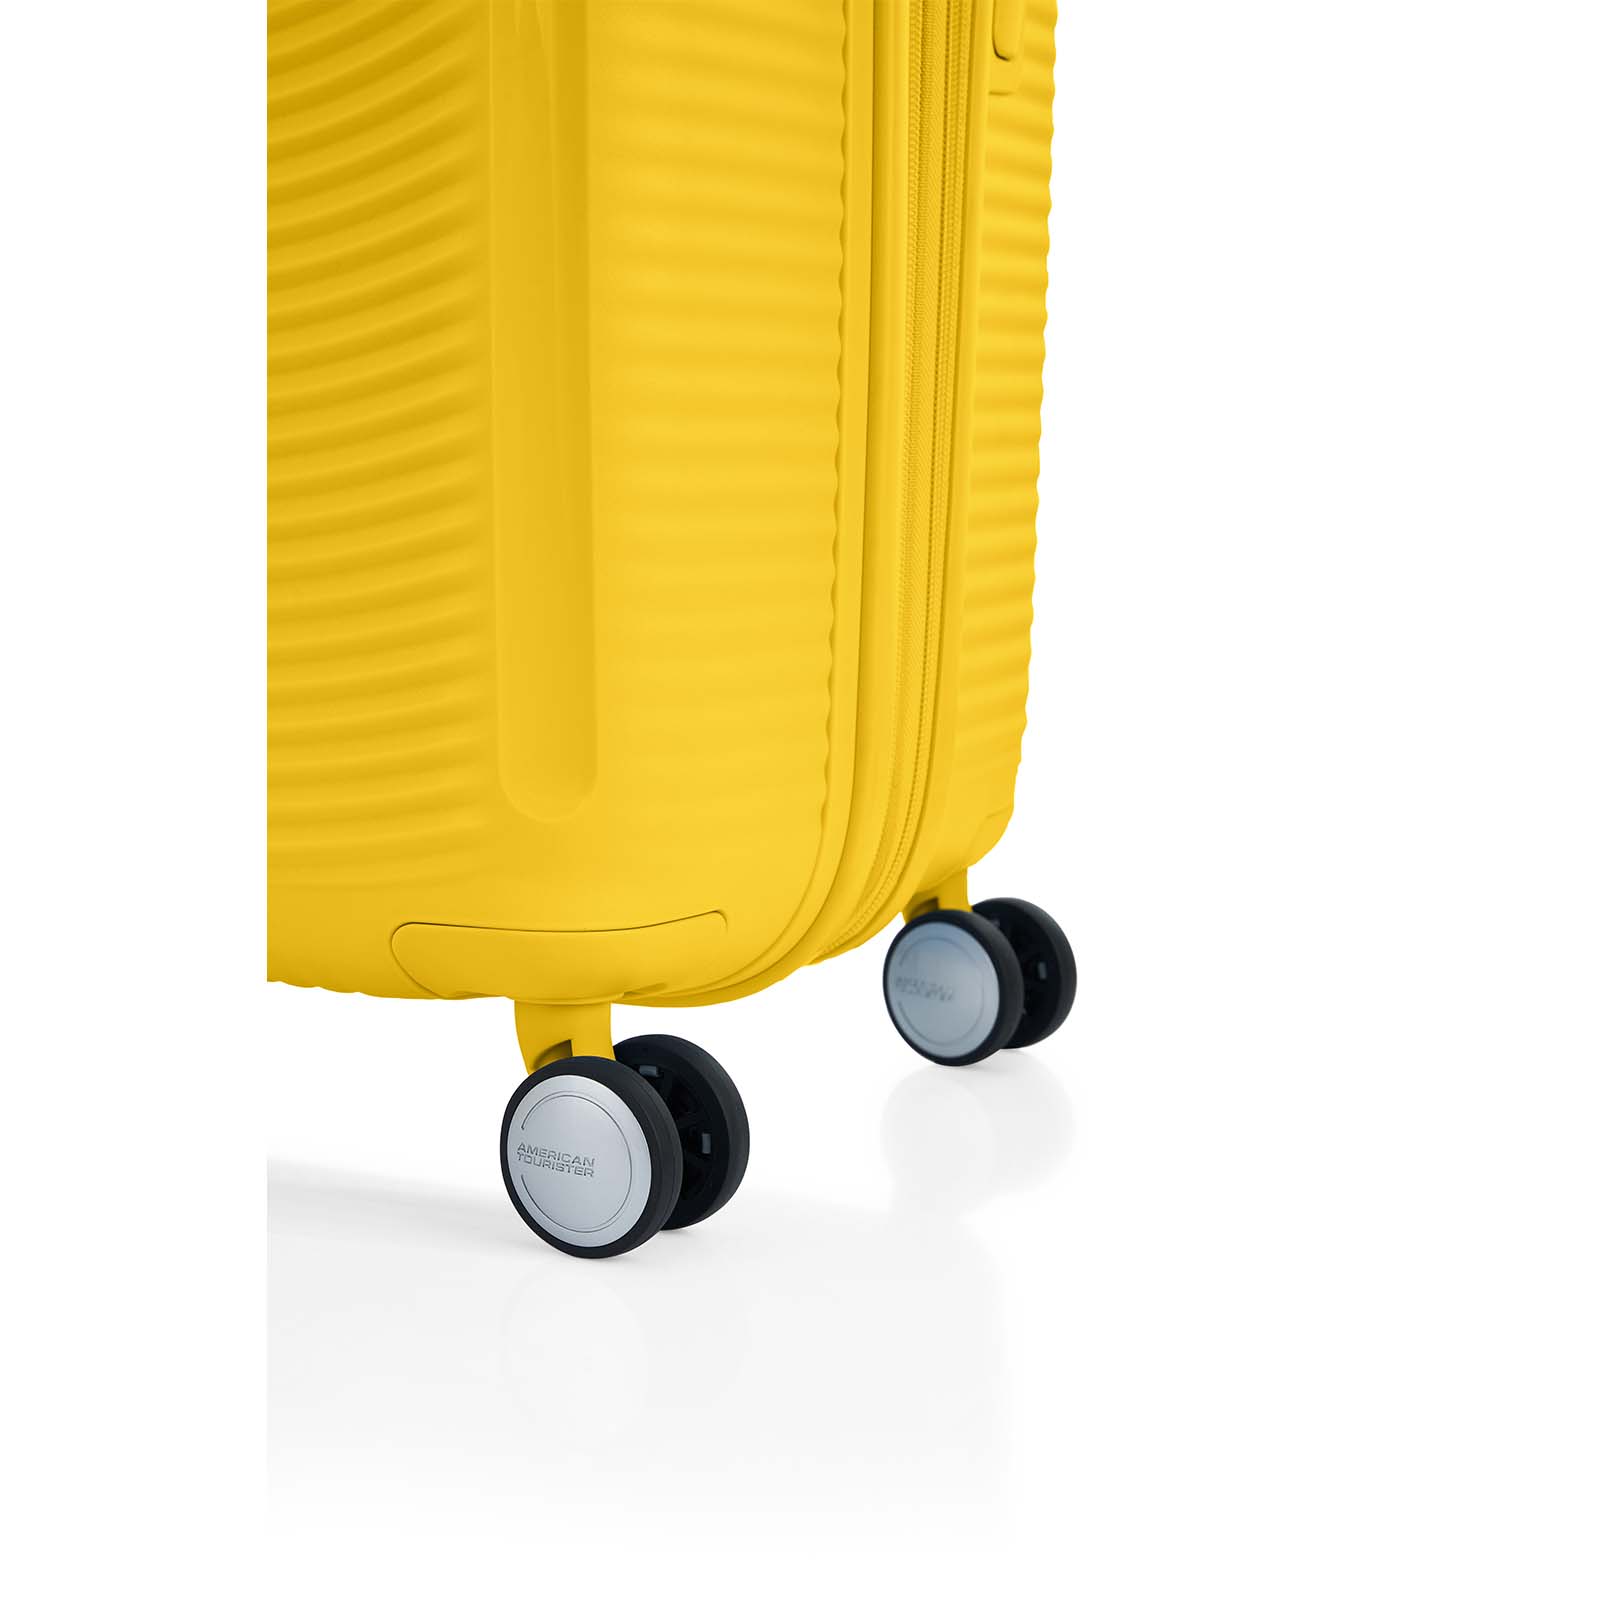 American-Tourister-Curio-2-80cm-Suitcase-Golden-Yellow-Wheels